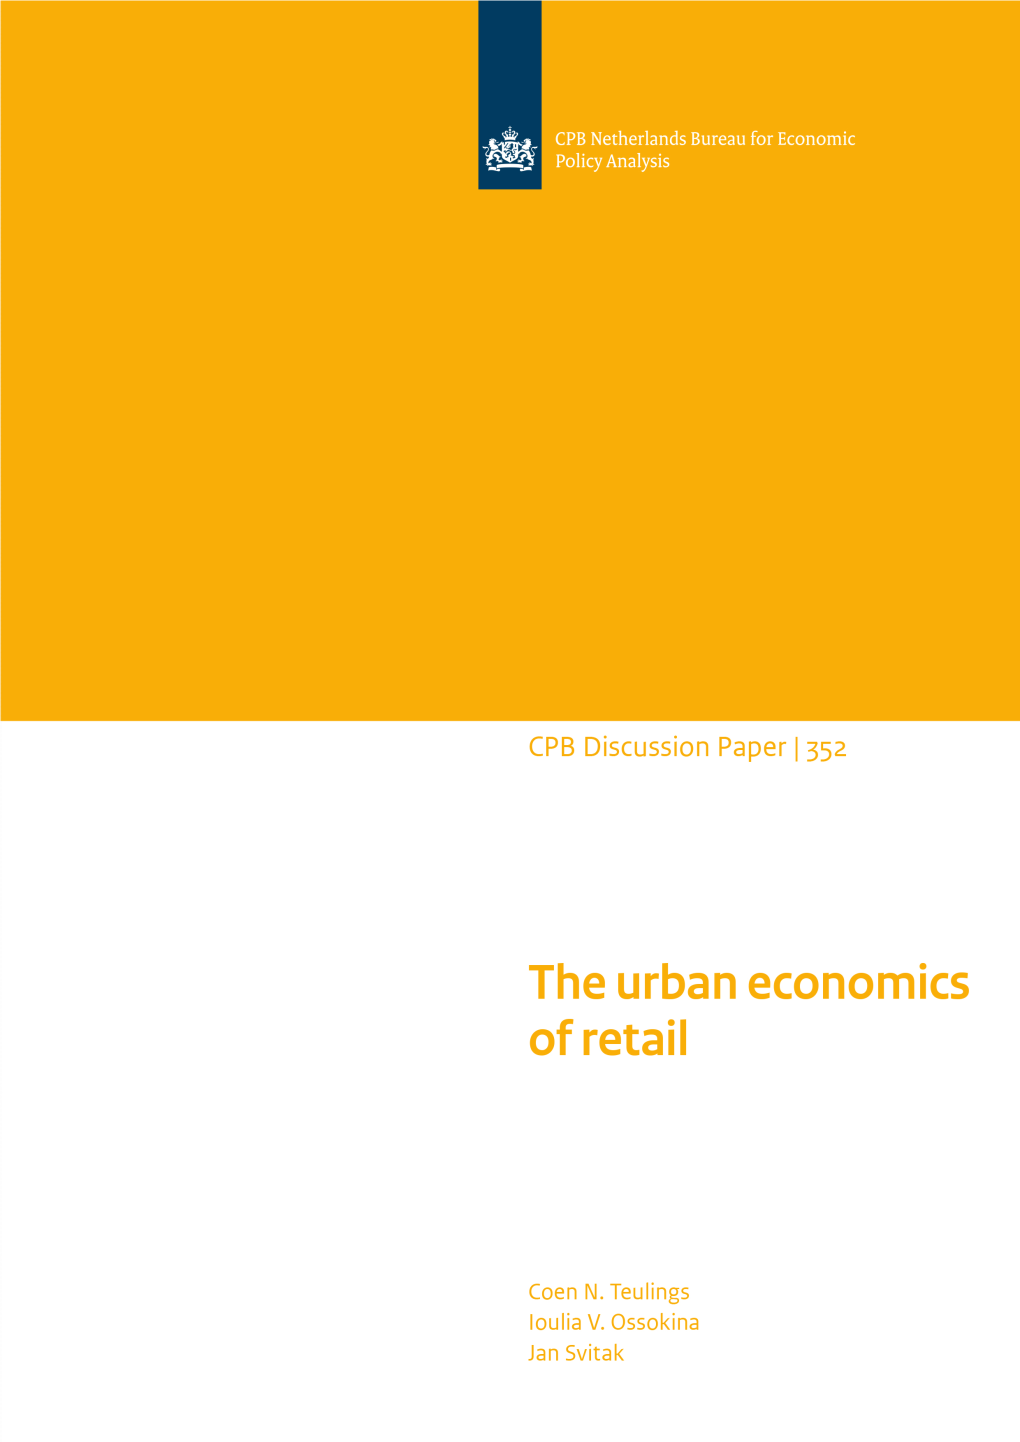 The Urban Economics of Retail